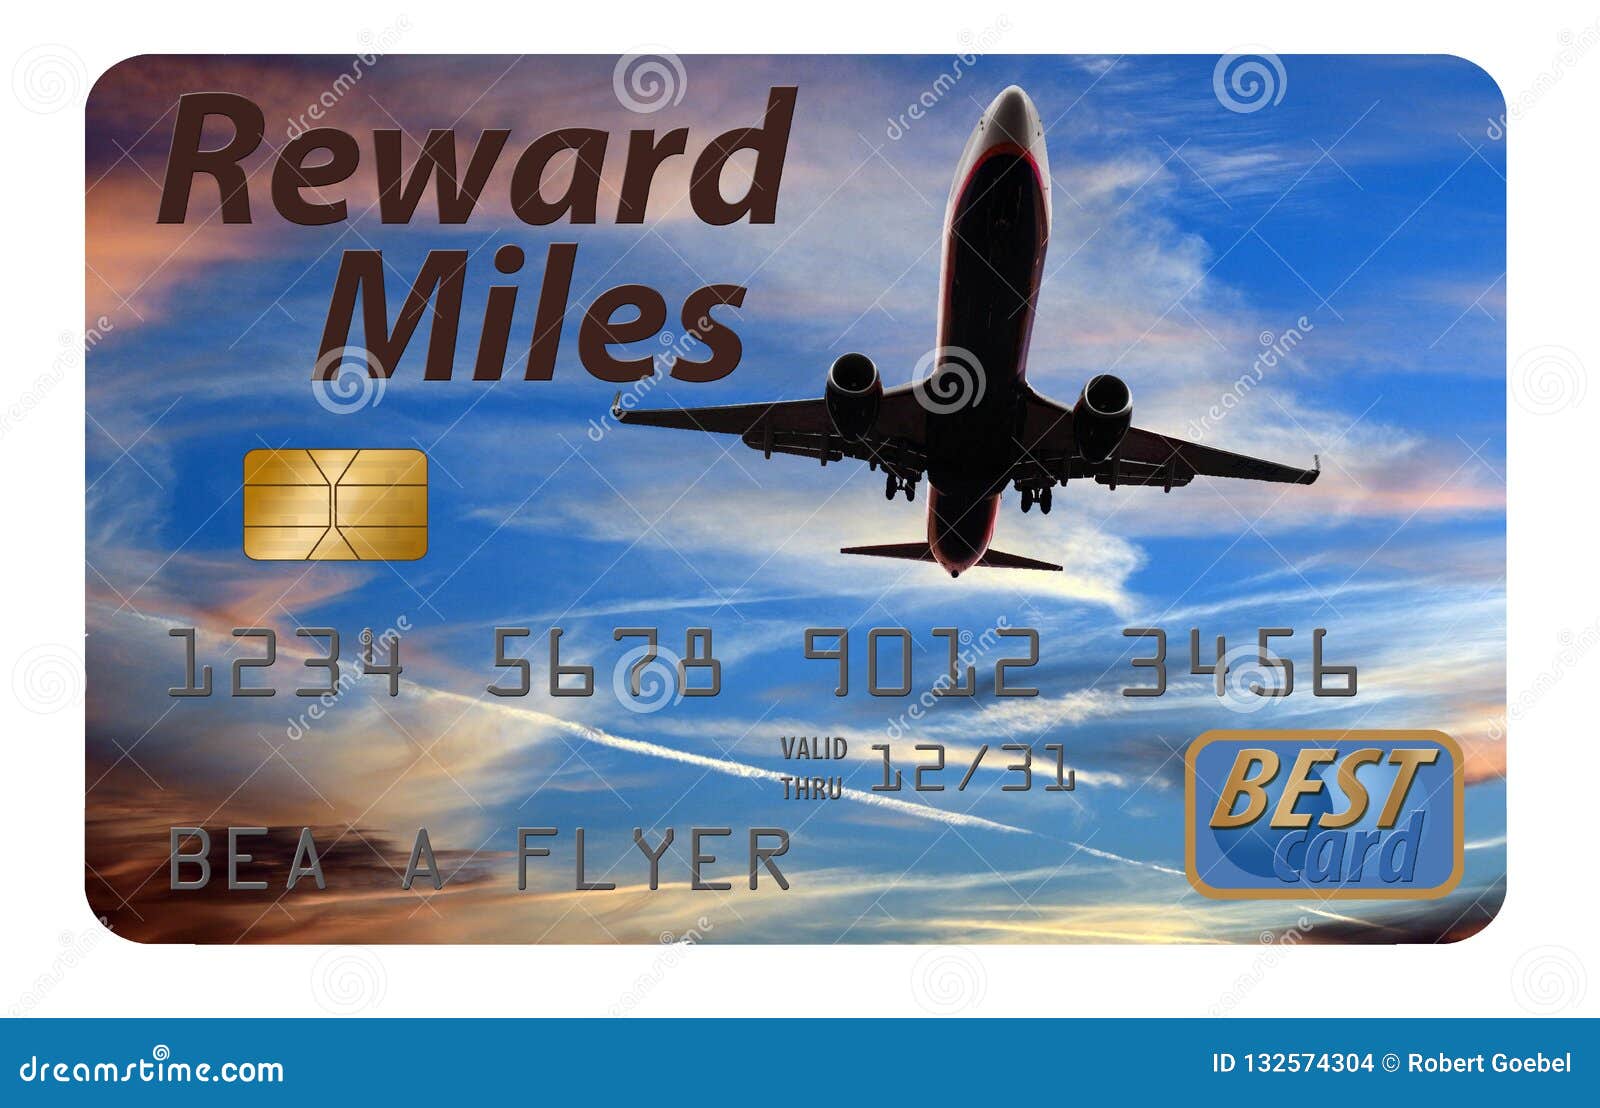 here is an air miles reward credit card